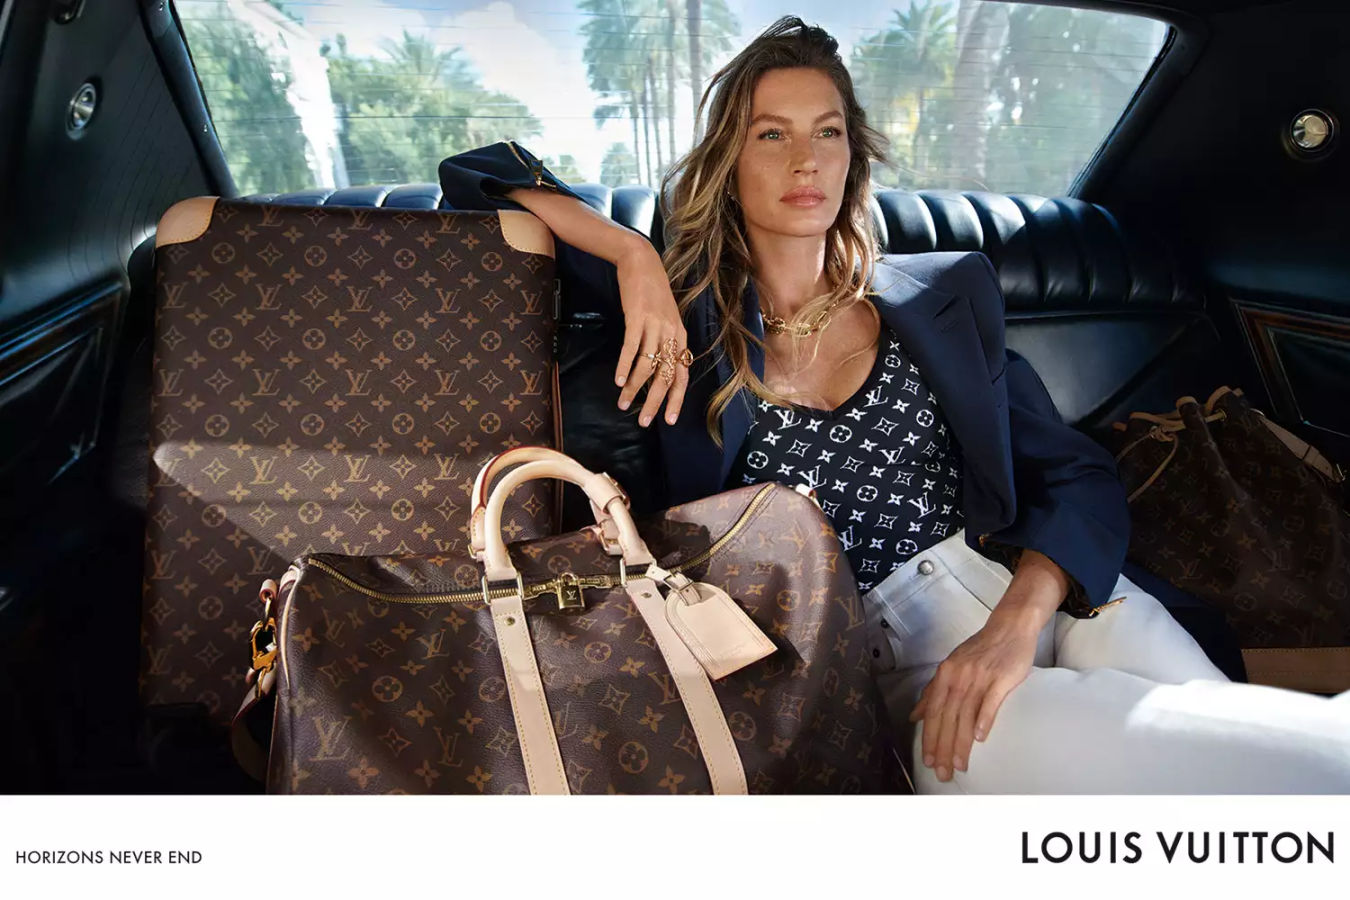 Louis Vuitton on X: #LouisVuitton unveils VIA, exploring a new